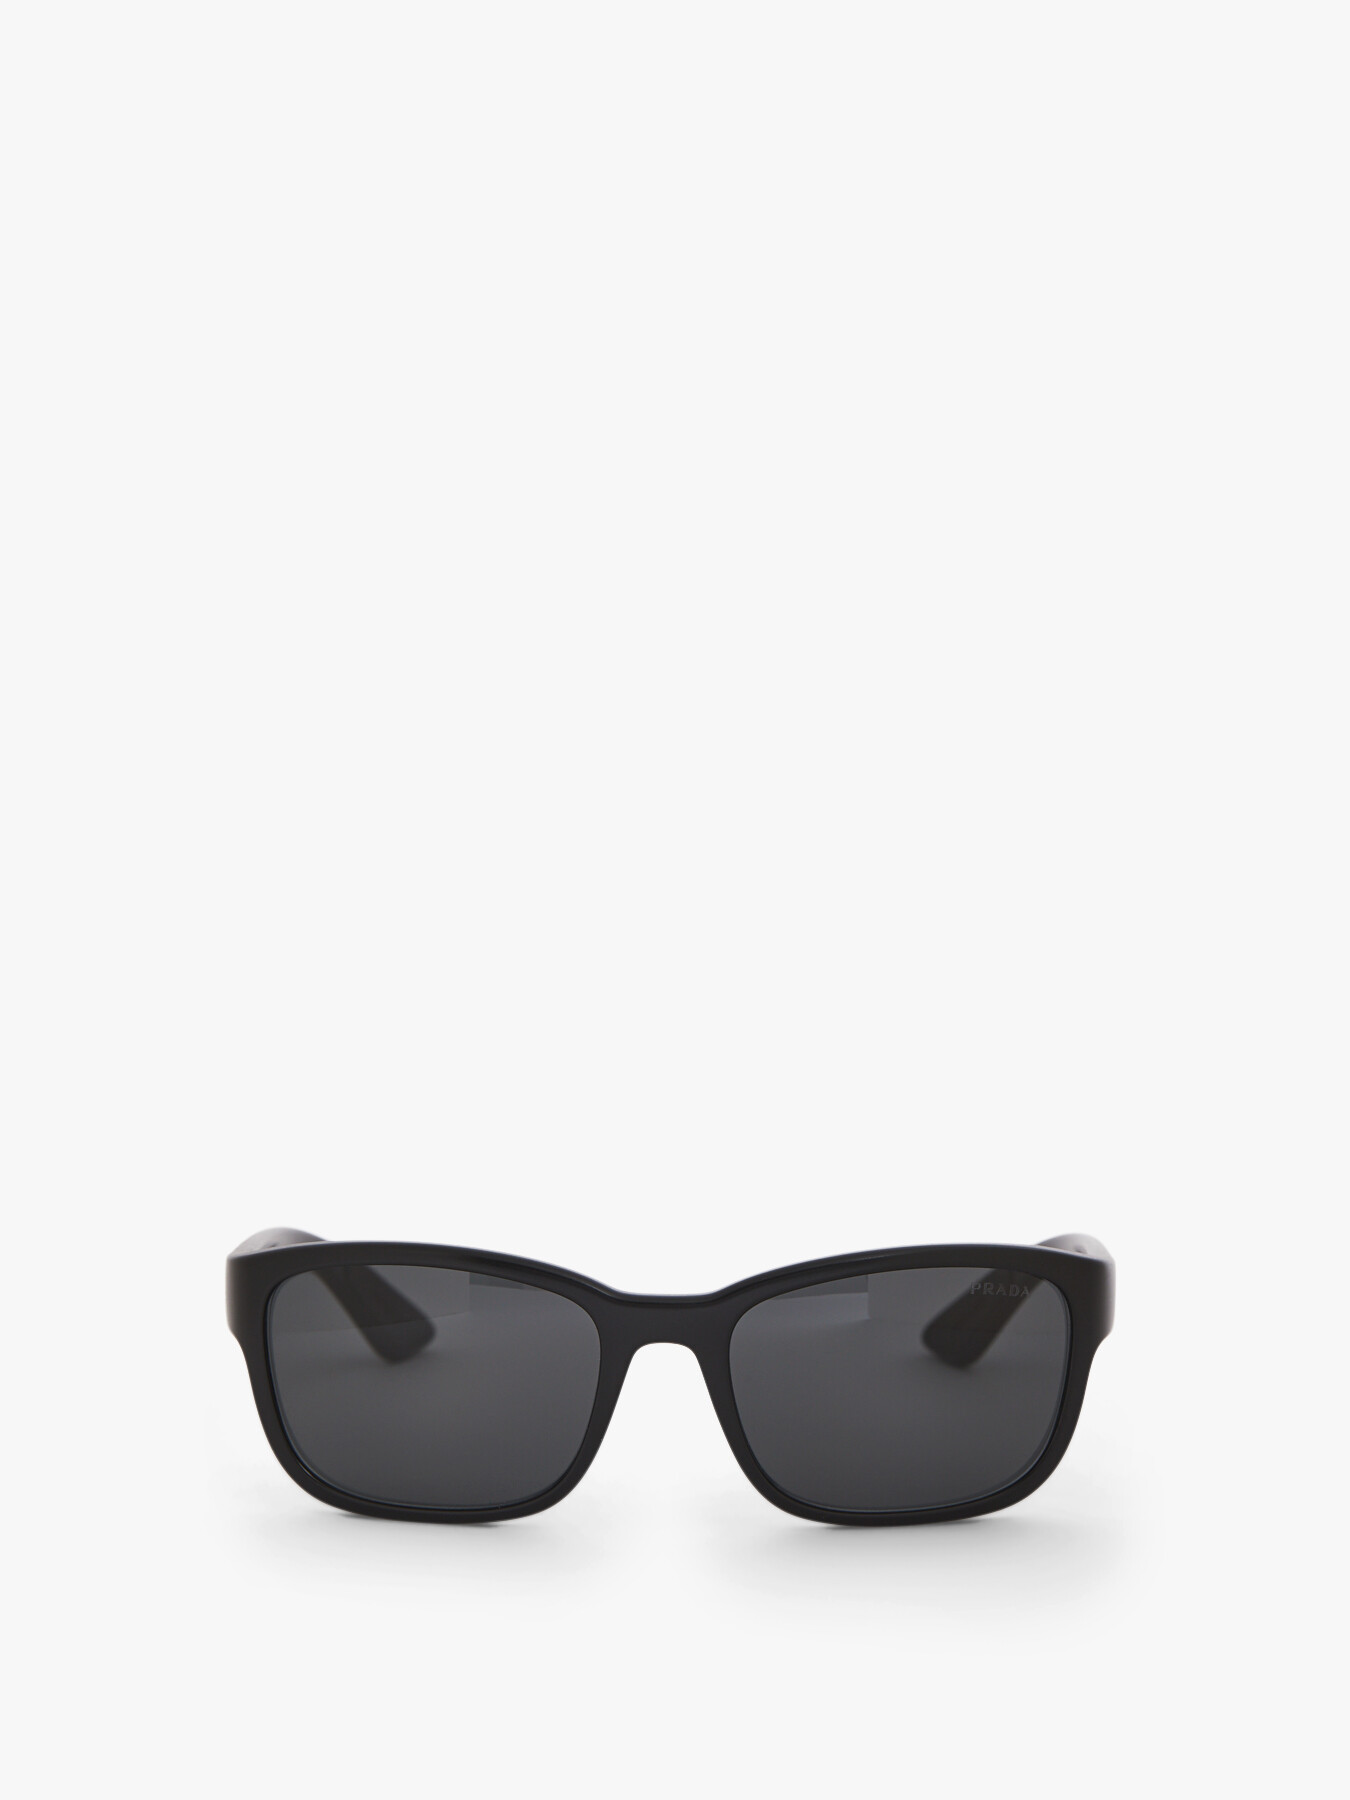 Prada Women's Acetate Mirrored Lens Sunglasses Black